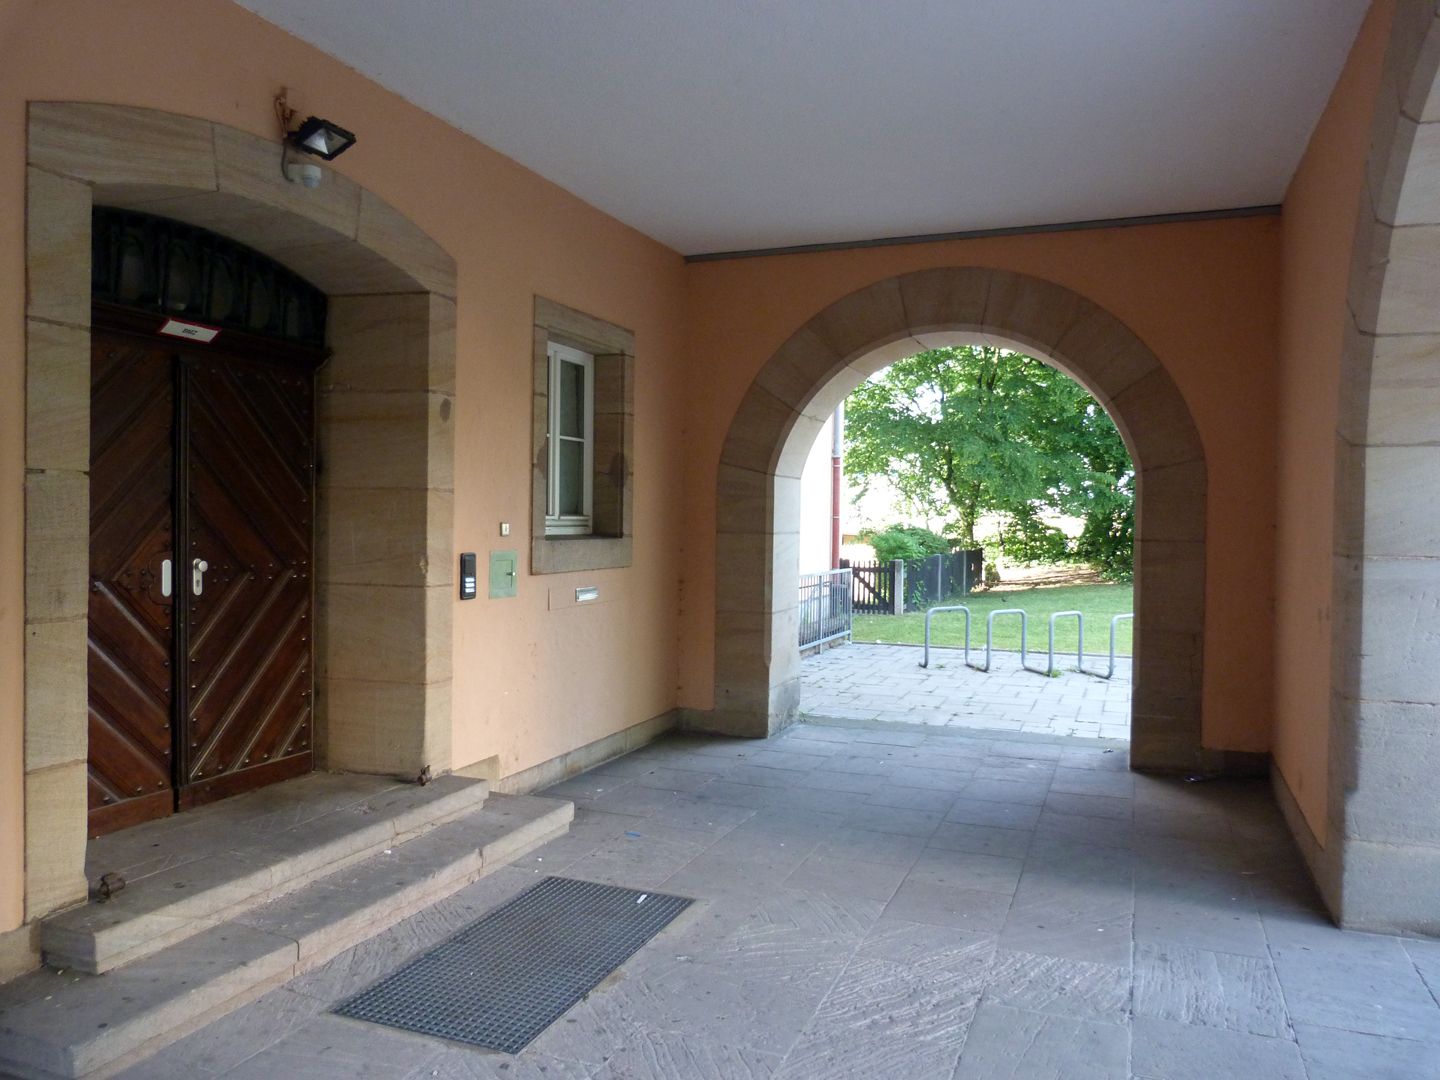 Konrad-Groß-School Straßenseite, Turm mit Eingang